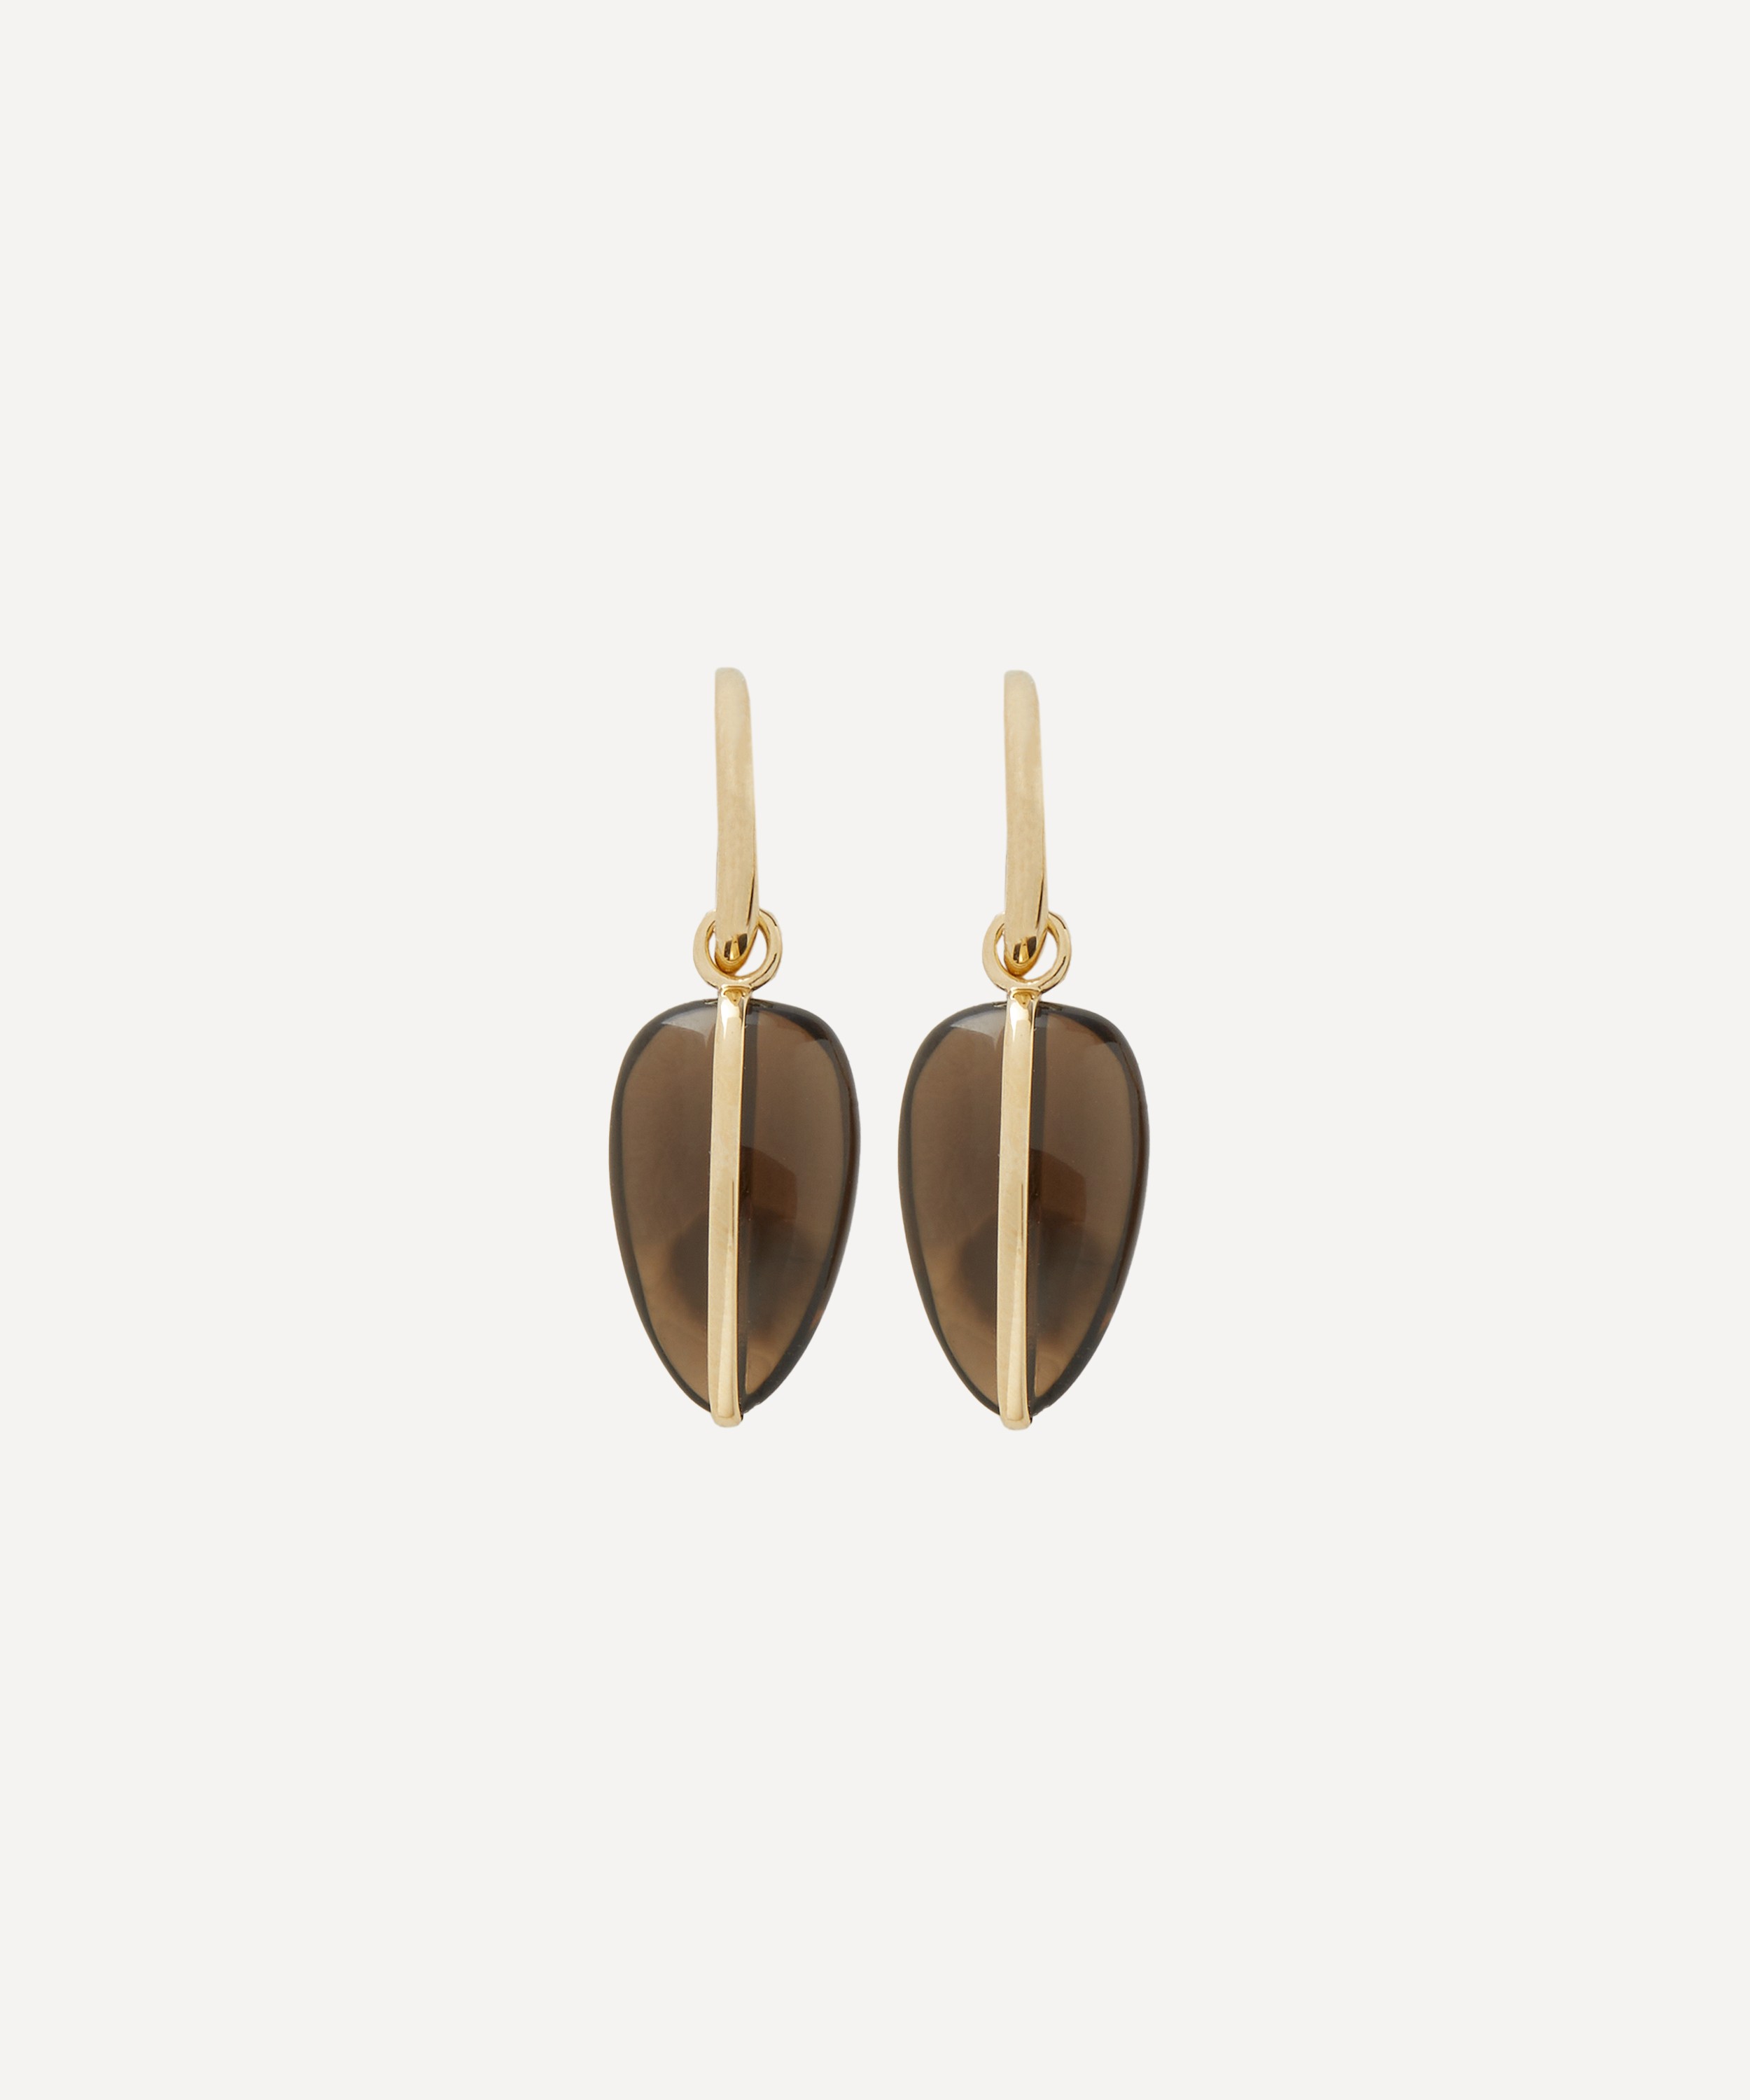 By Pariah - 14ct Gold Smoky Quartz Pebble Drop Earrings